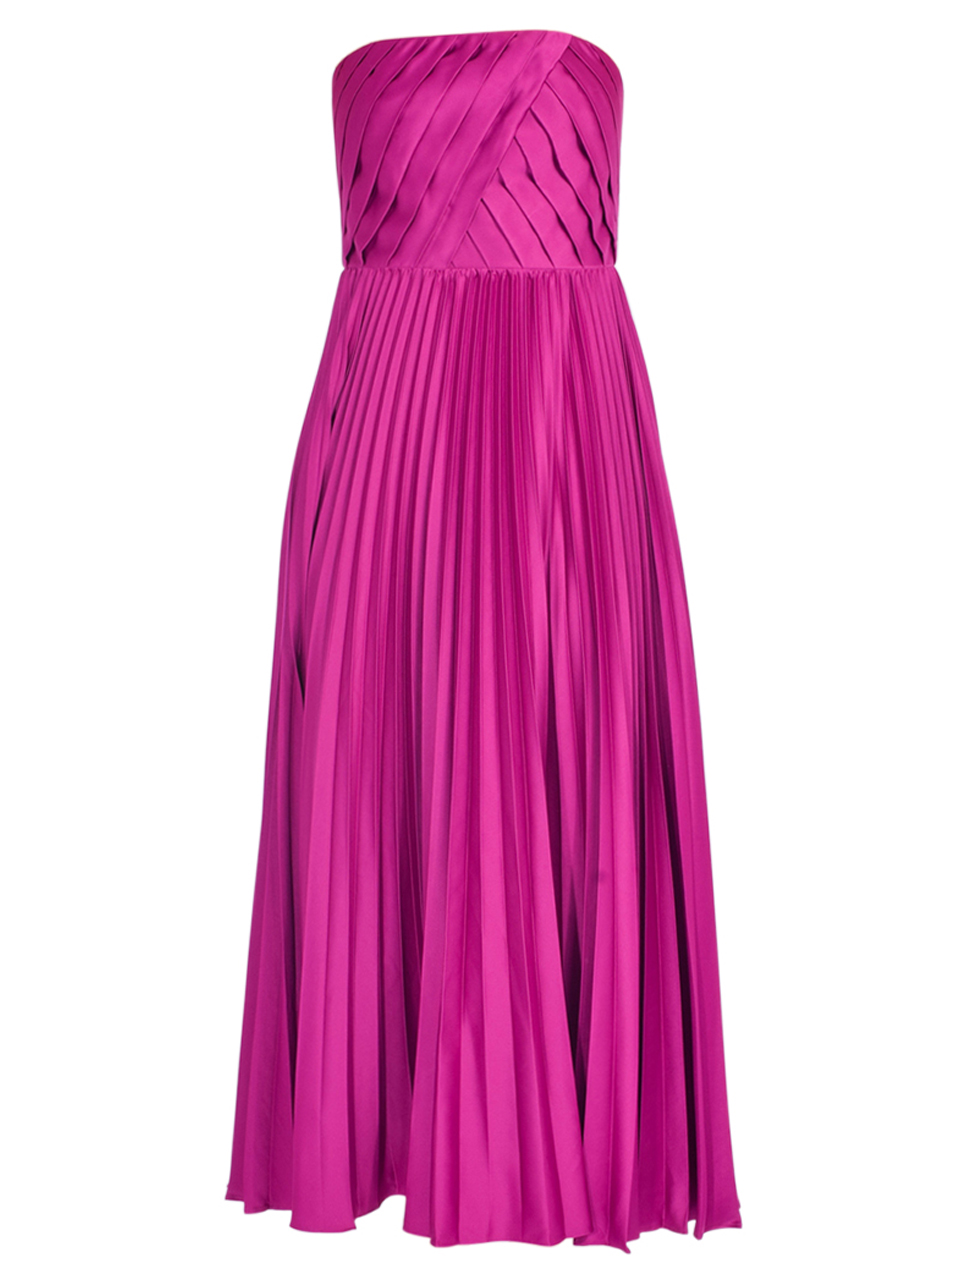 AMUR Conan Strapless Dress in Purple Sangria Product Shot 